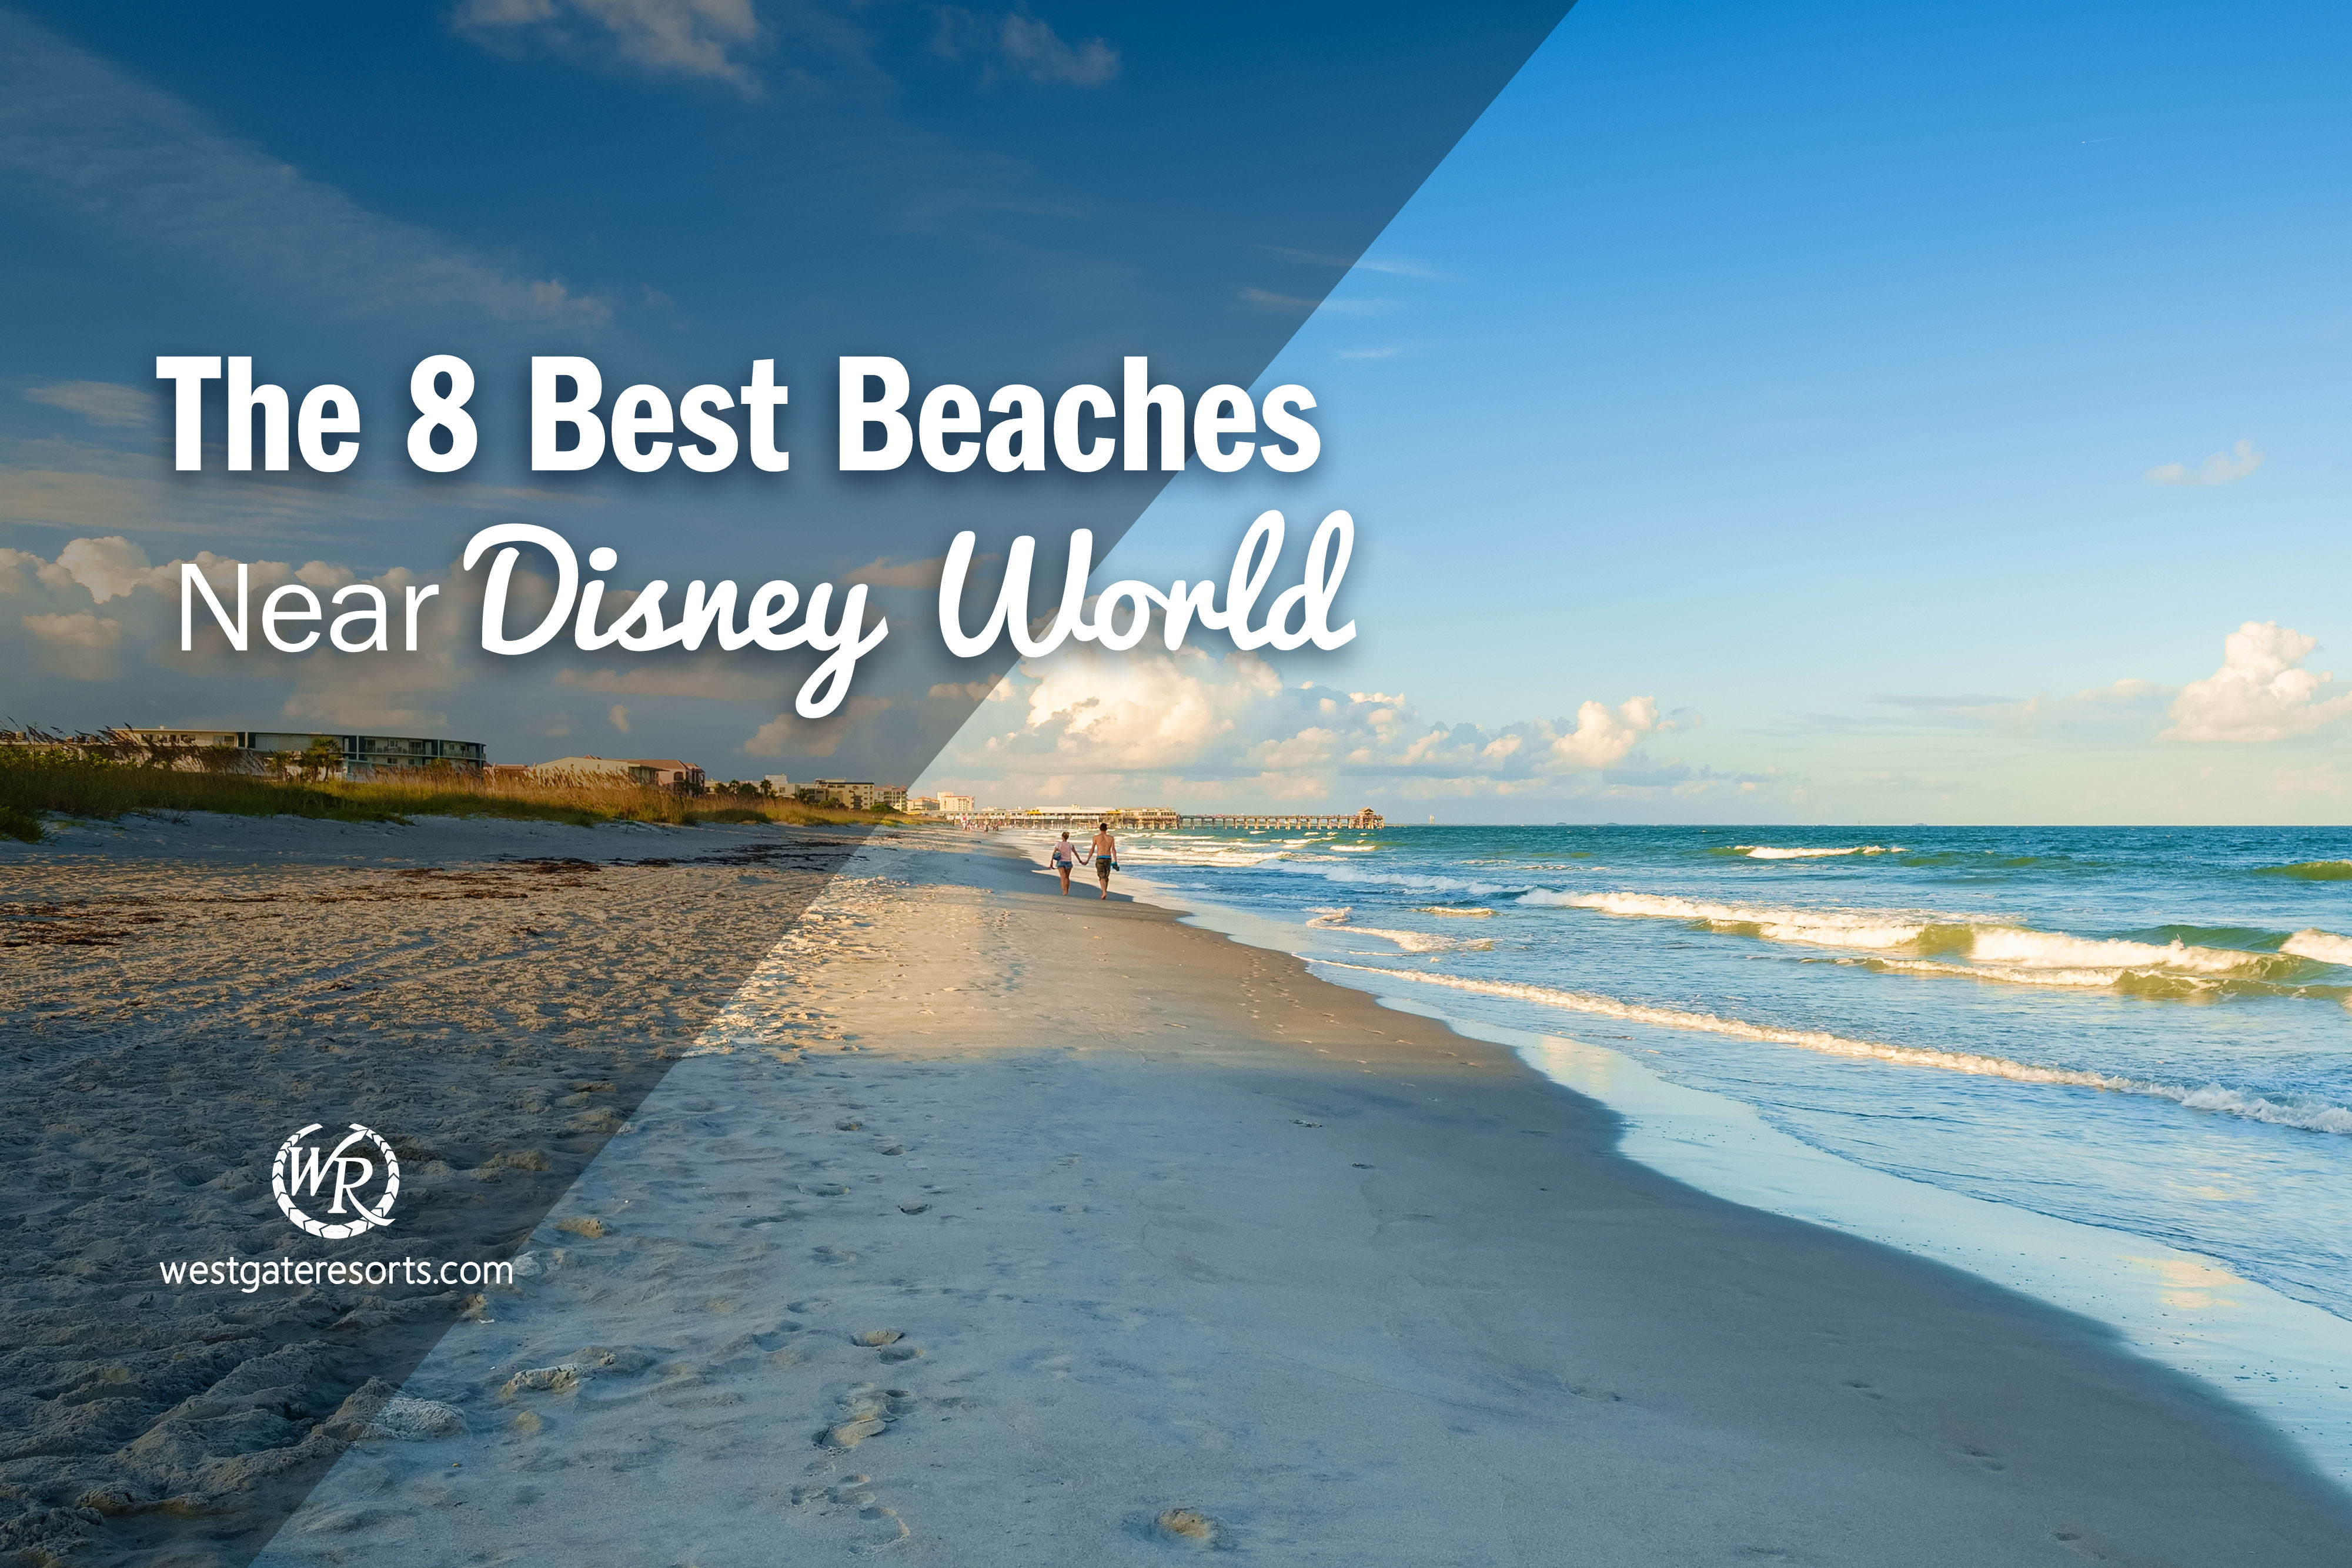 Las 8 mejores playas cerca de Disney World - Playas cerca de Orlando